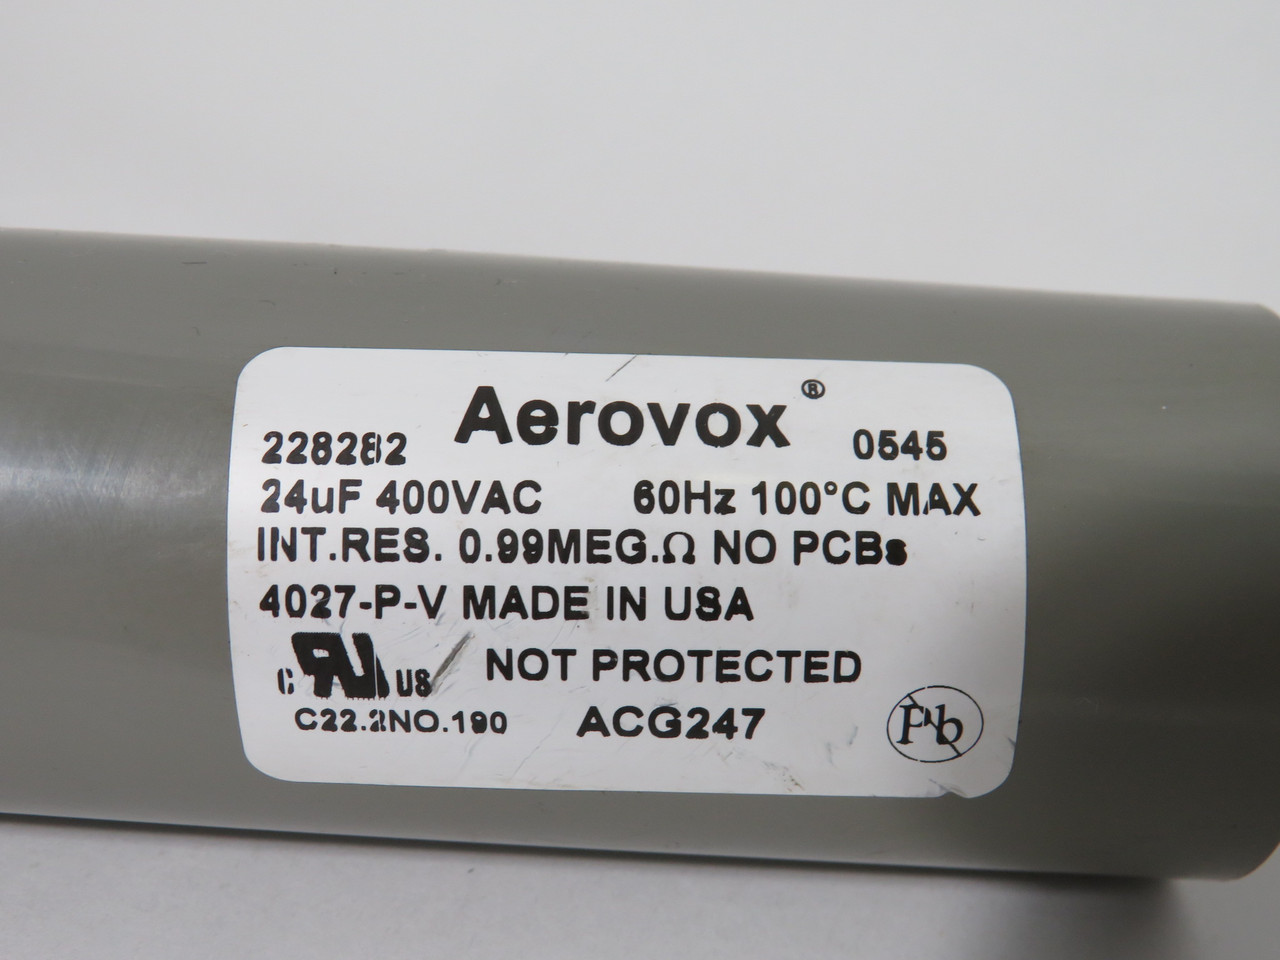 Aerovox 228282 Capacitor for Ballast 24uf 400VAC 60Hz .99MEG Ohm *Cut Wire* USED